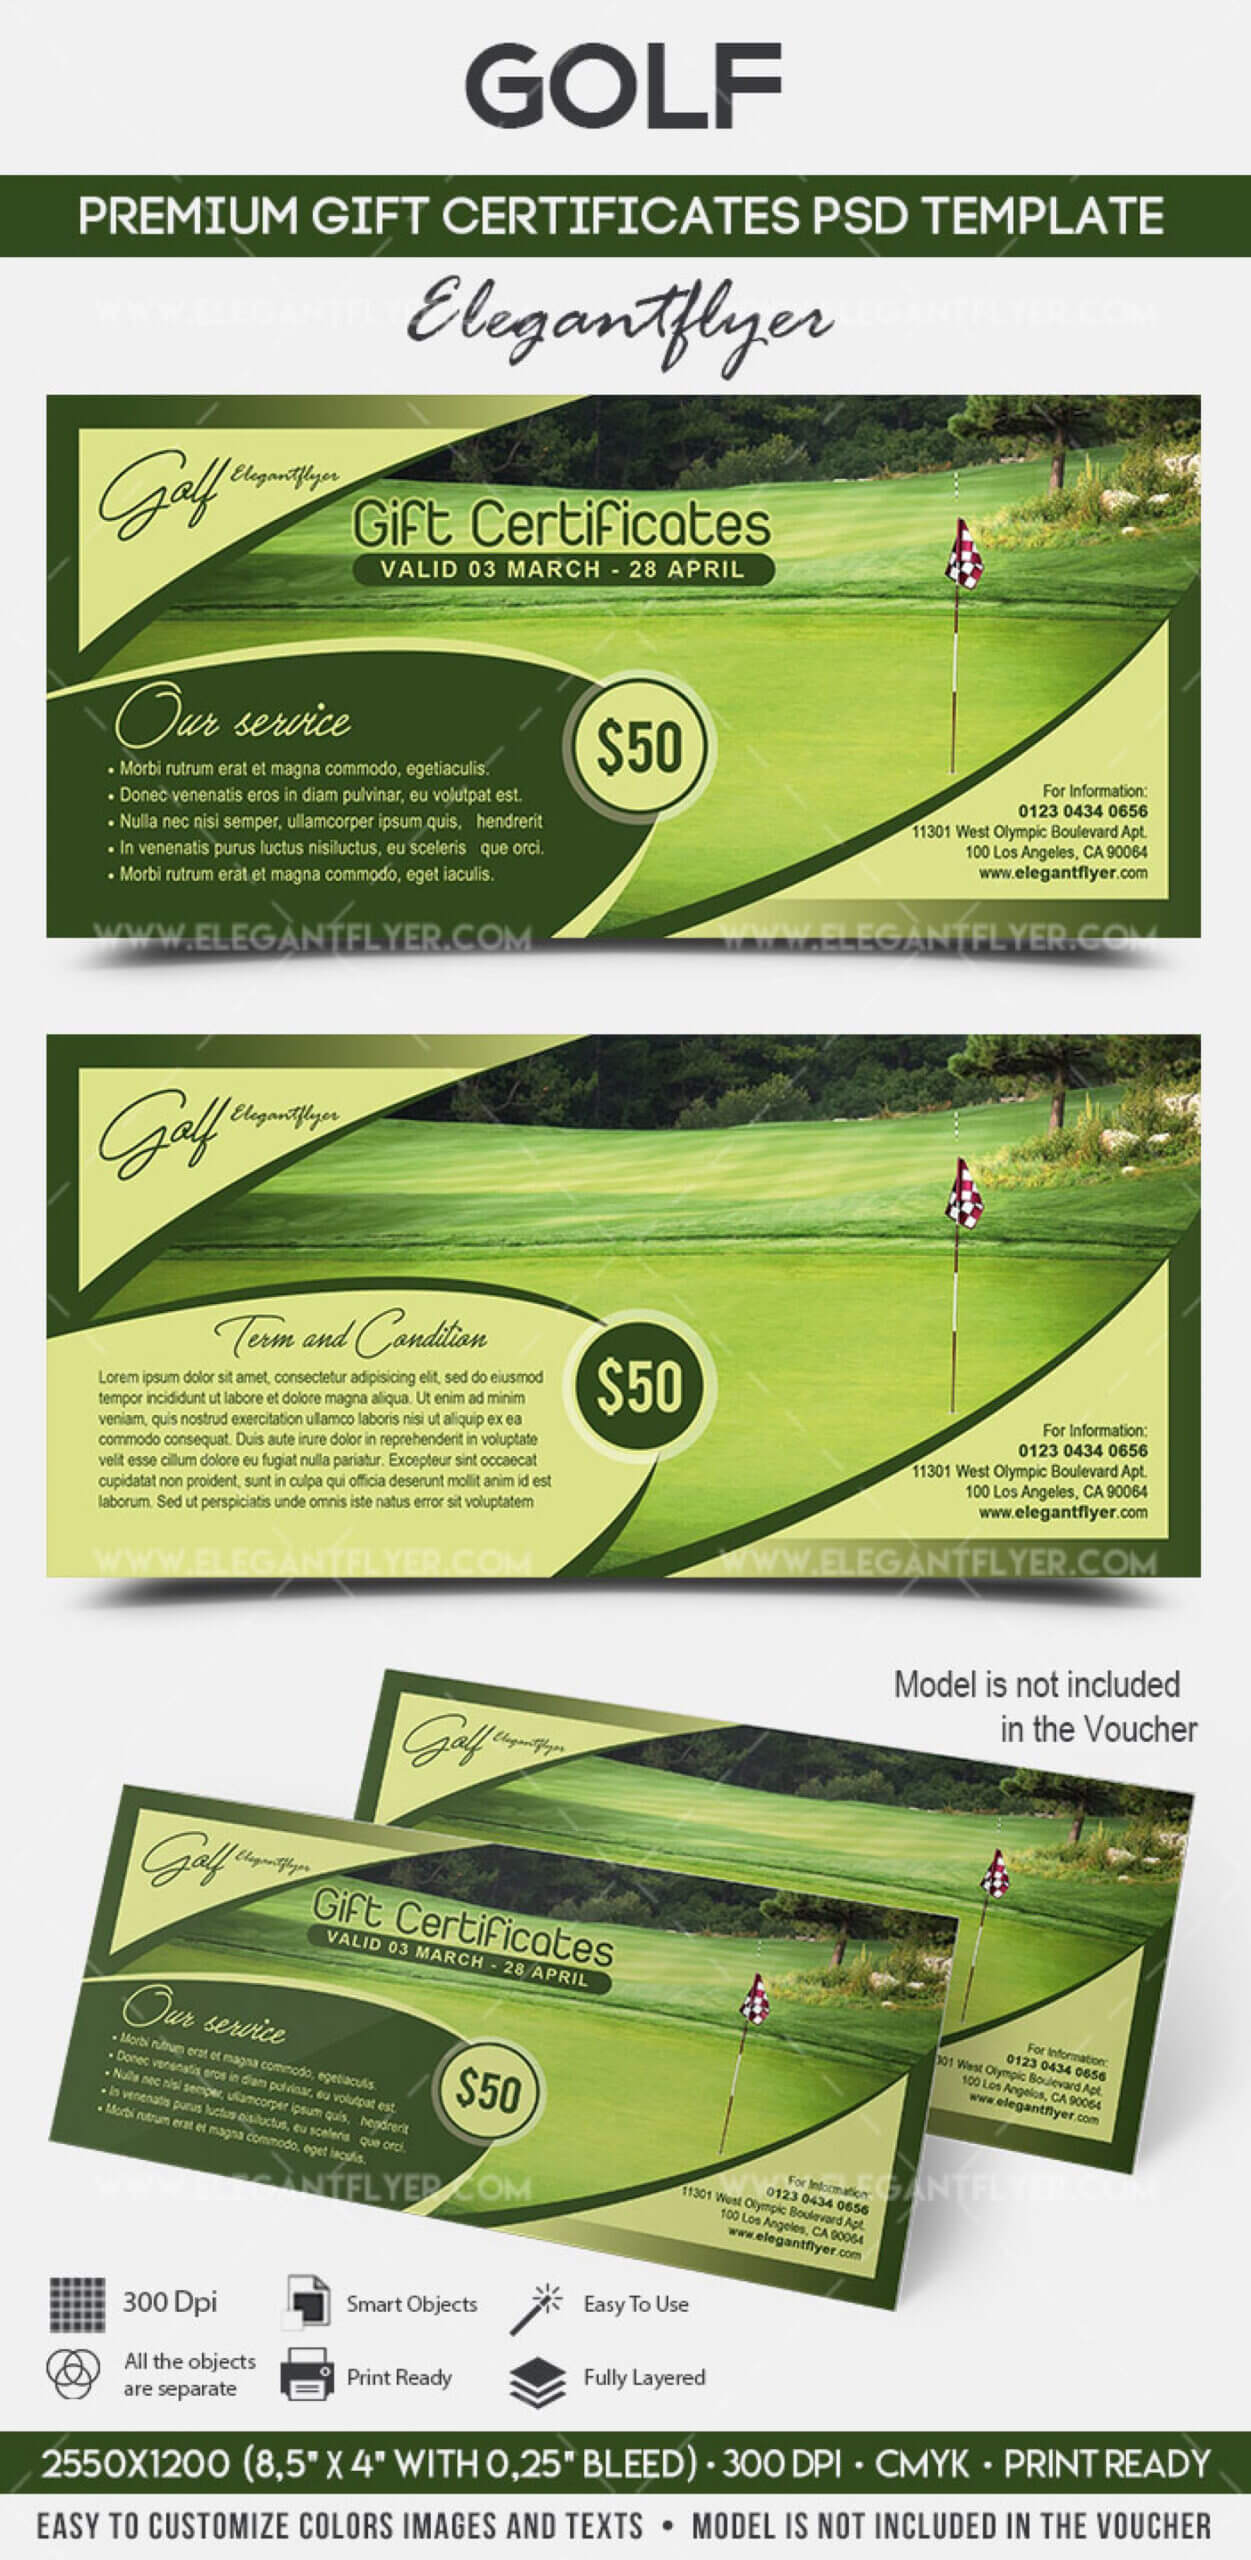 002 Template Ideas Golf Course Gift Certificate Free Intended For Golf Gift Certificate Template